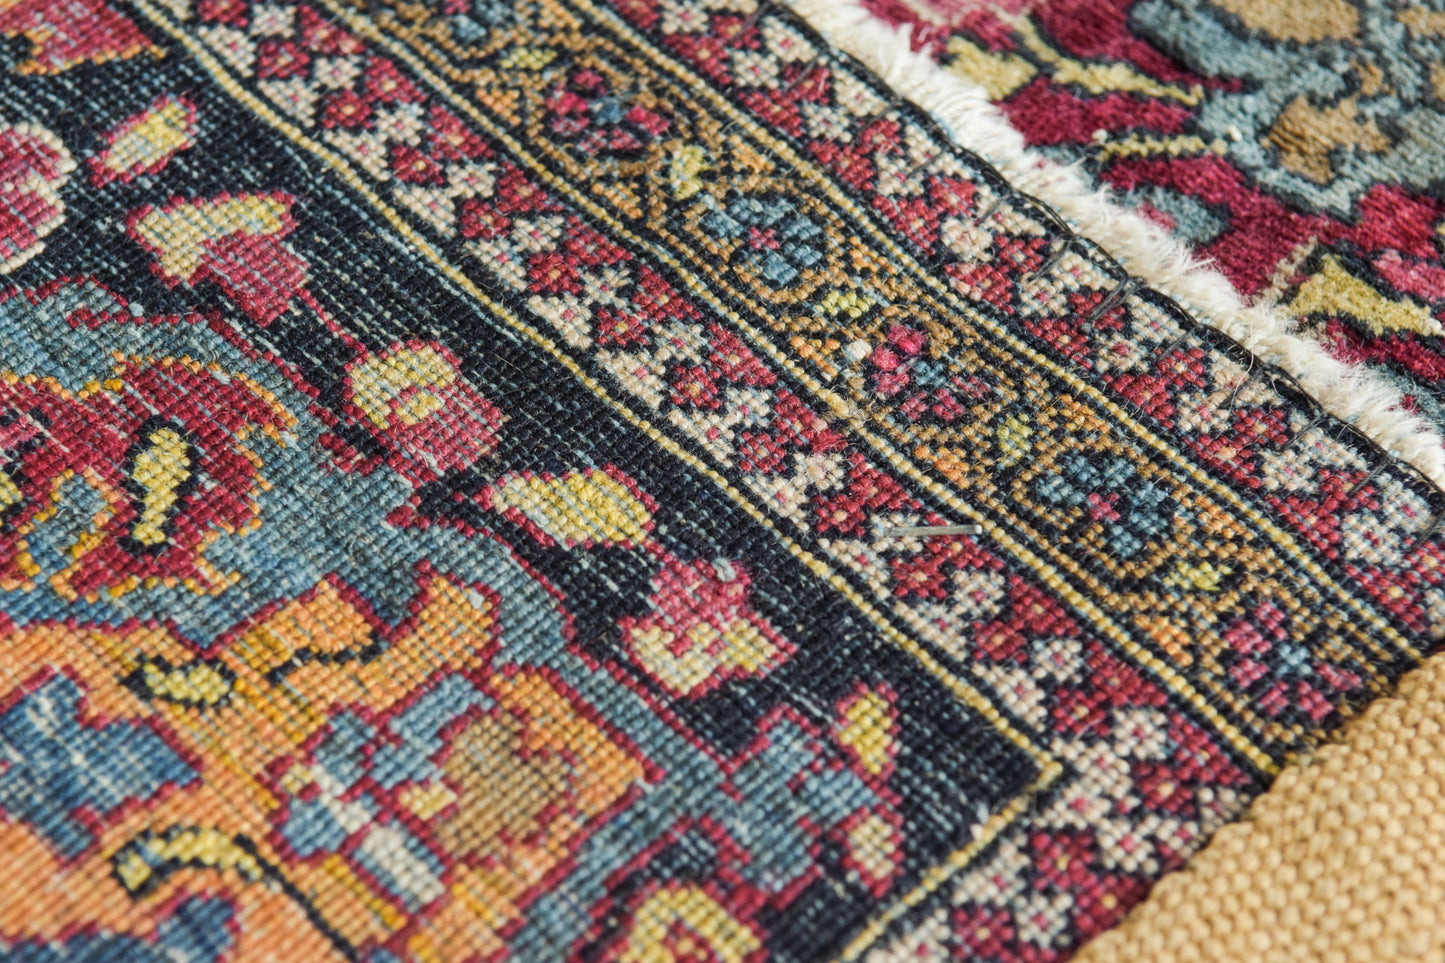 Decorative Handmade Persian Rug